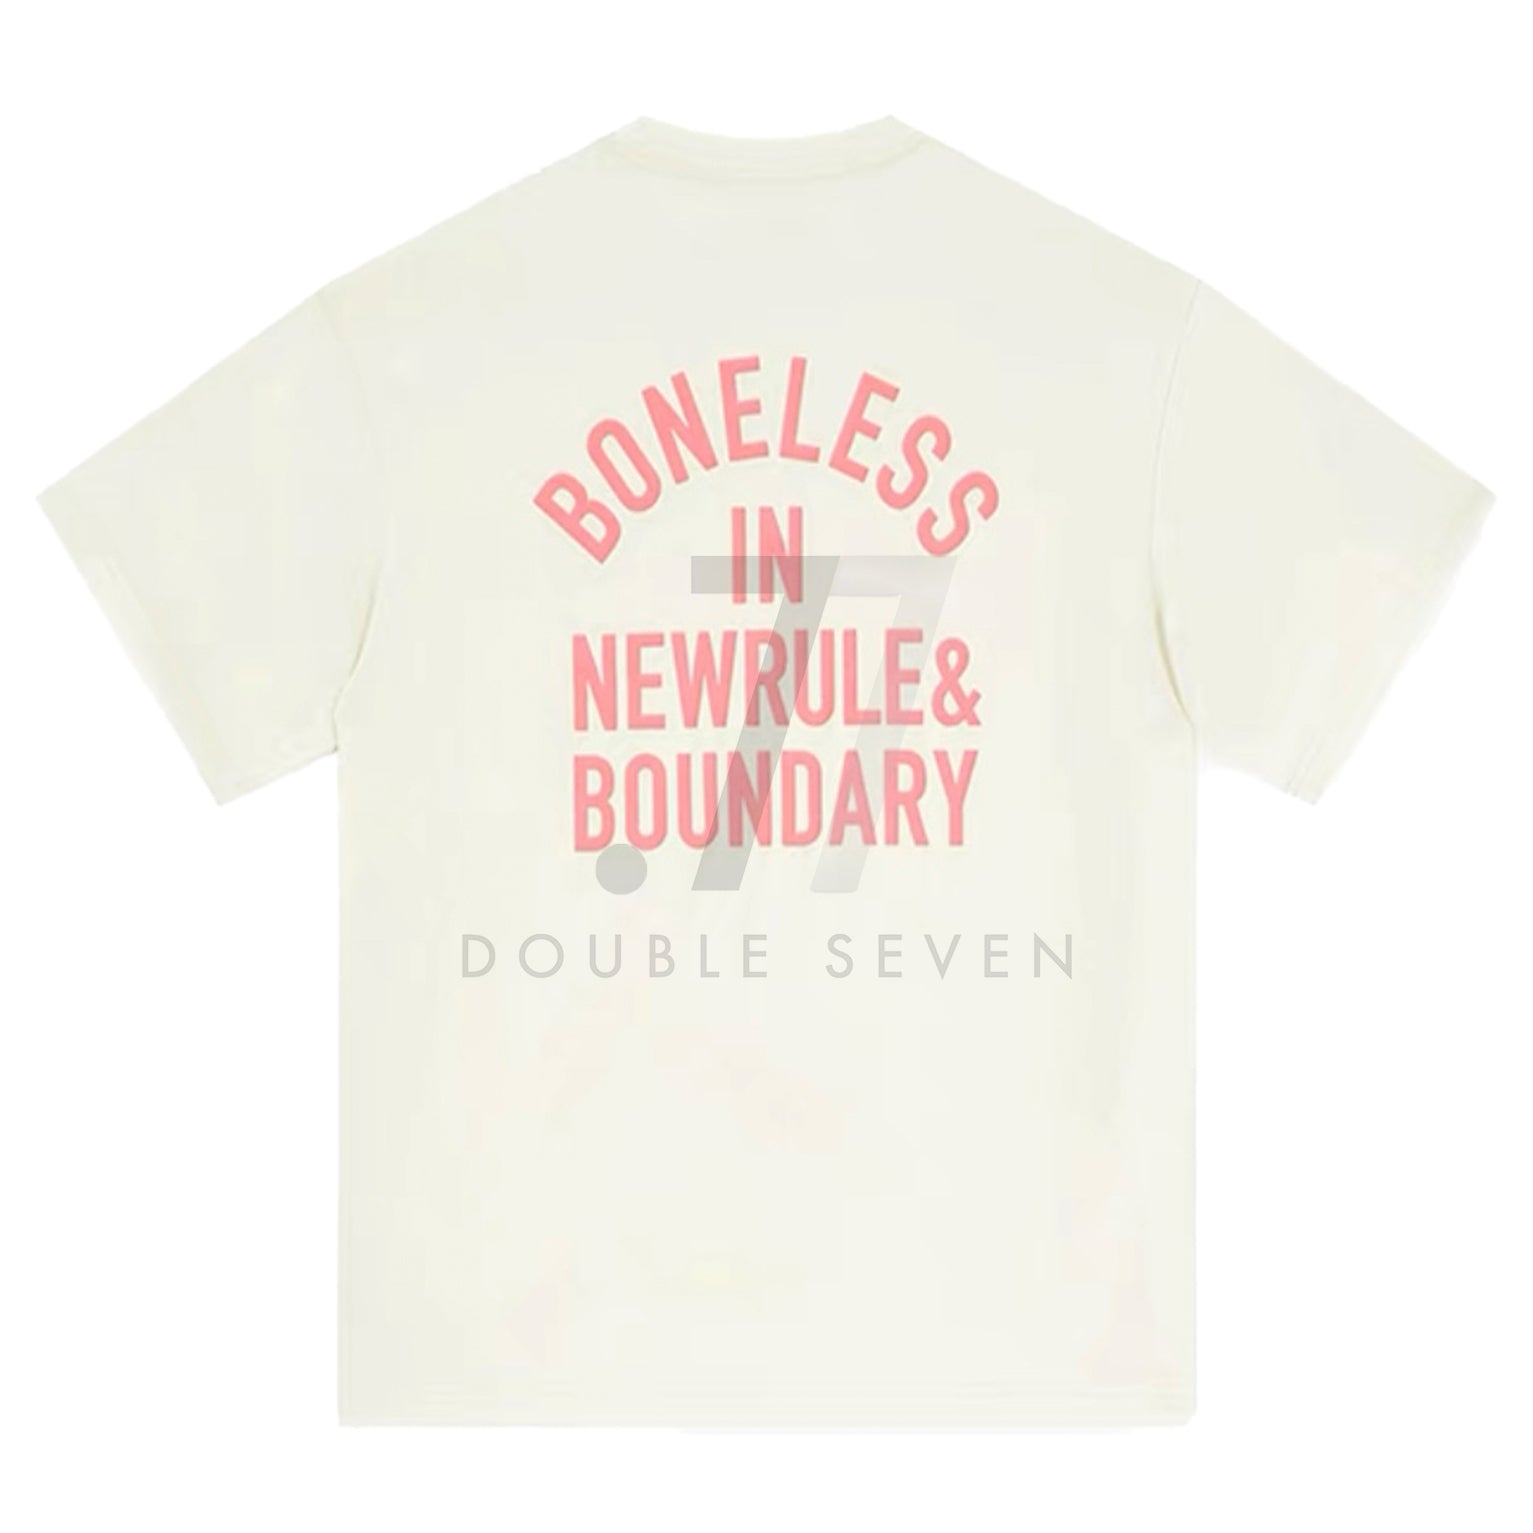 Boneless "Rule & Boundary" Printed Tee